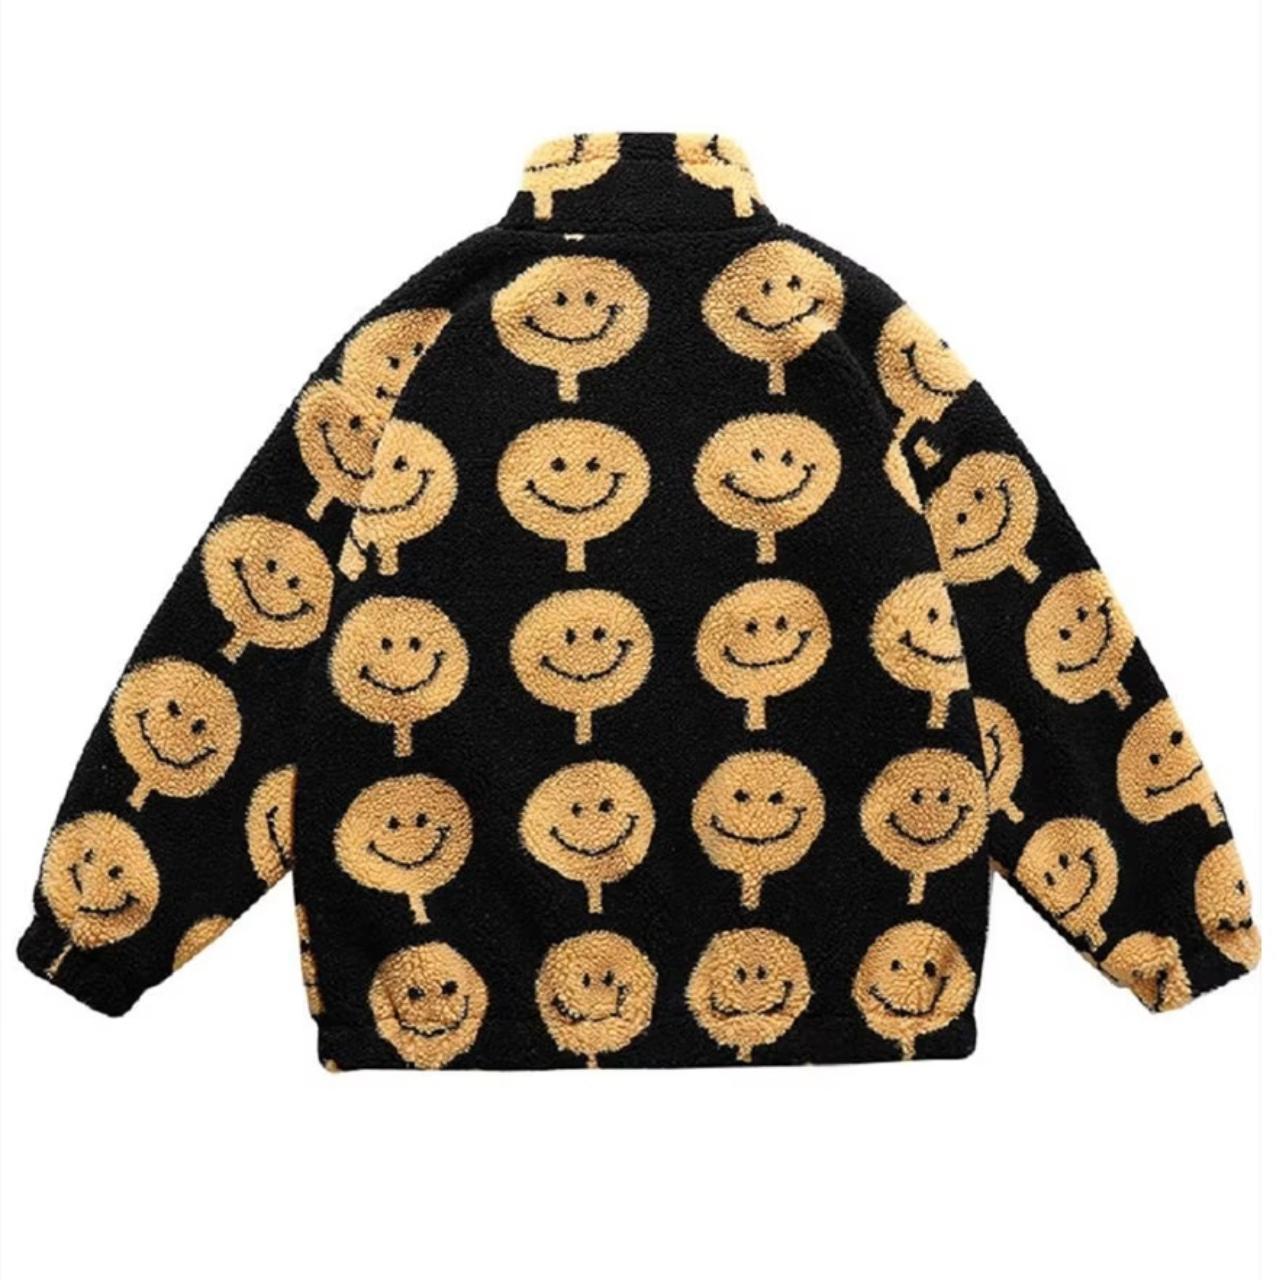 Emoji fleece jacket faux fur smiley print bomber in... - Depop